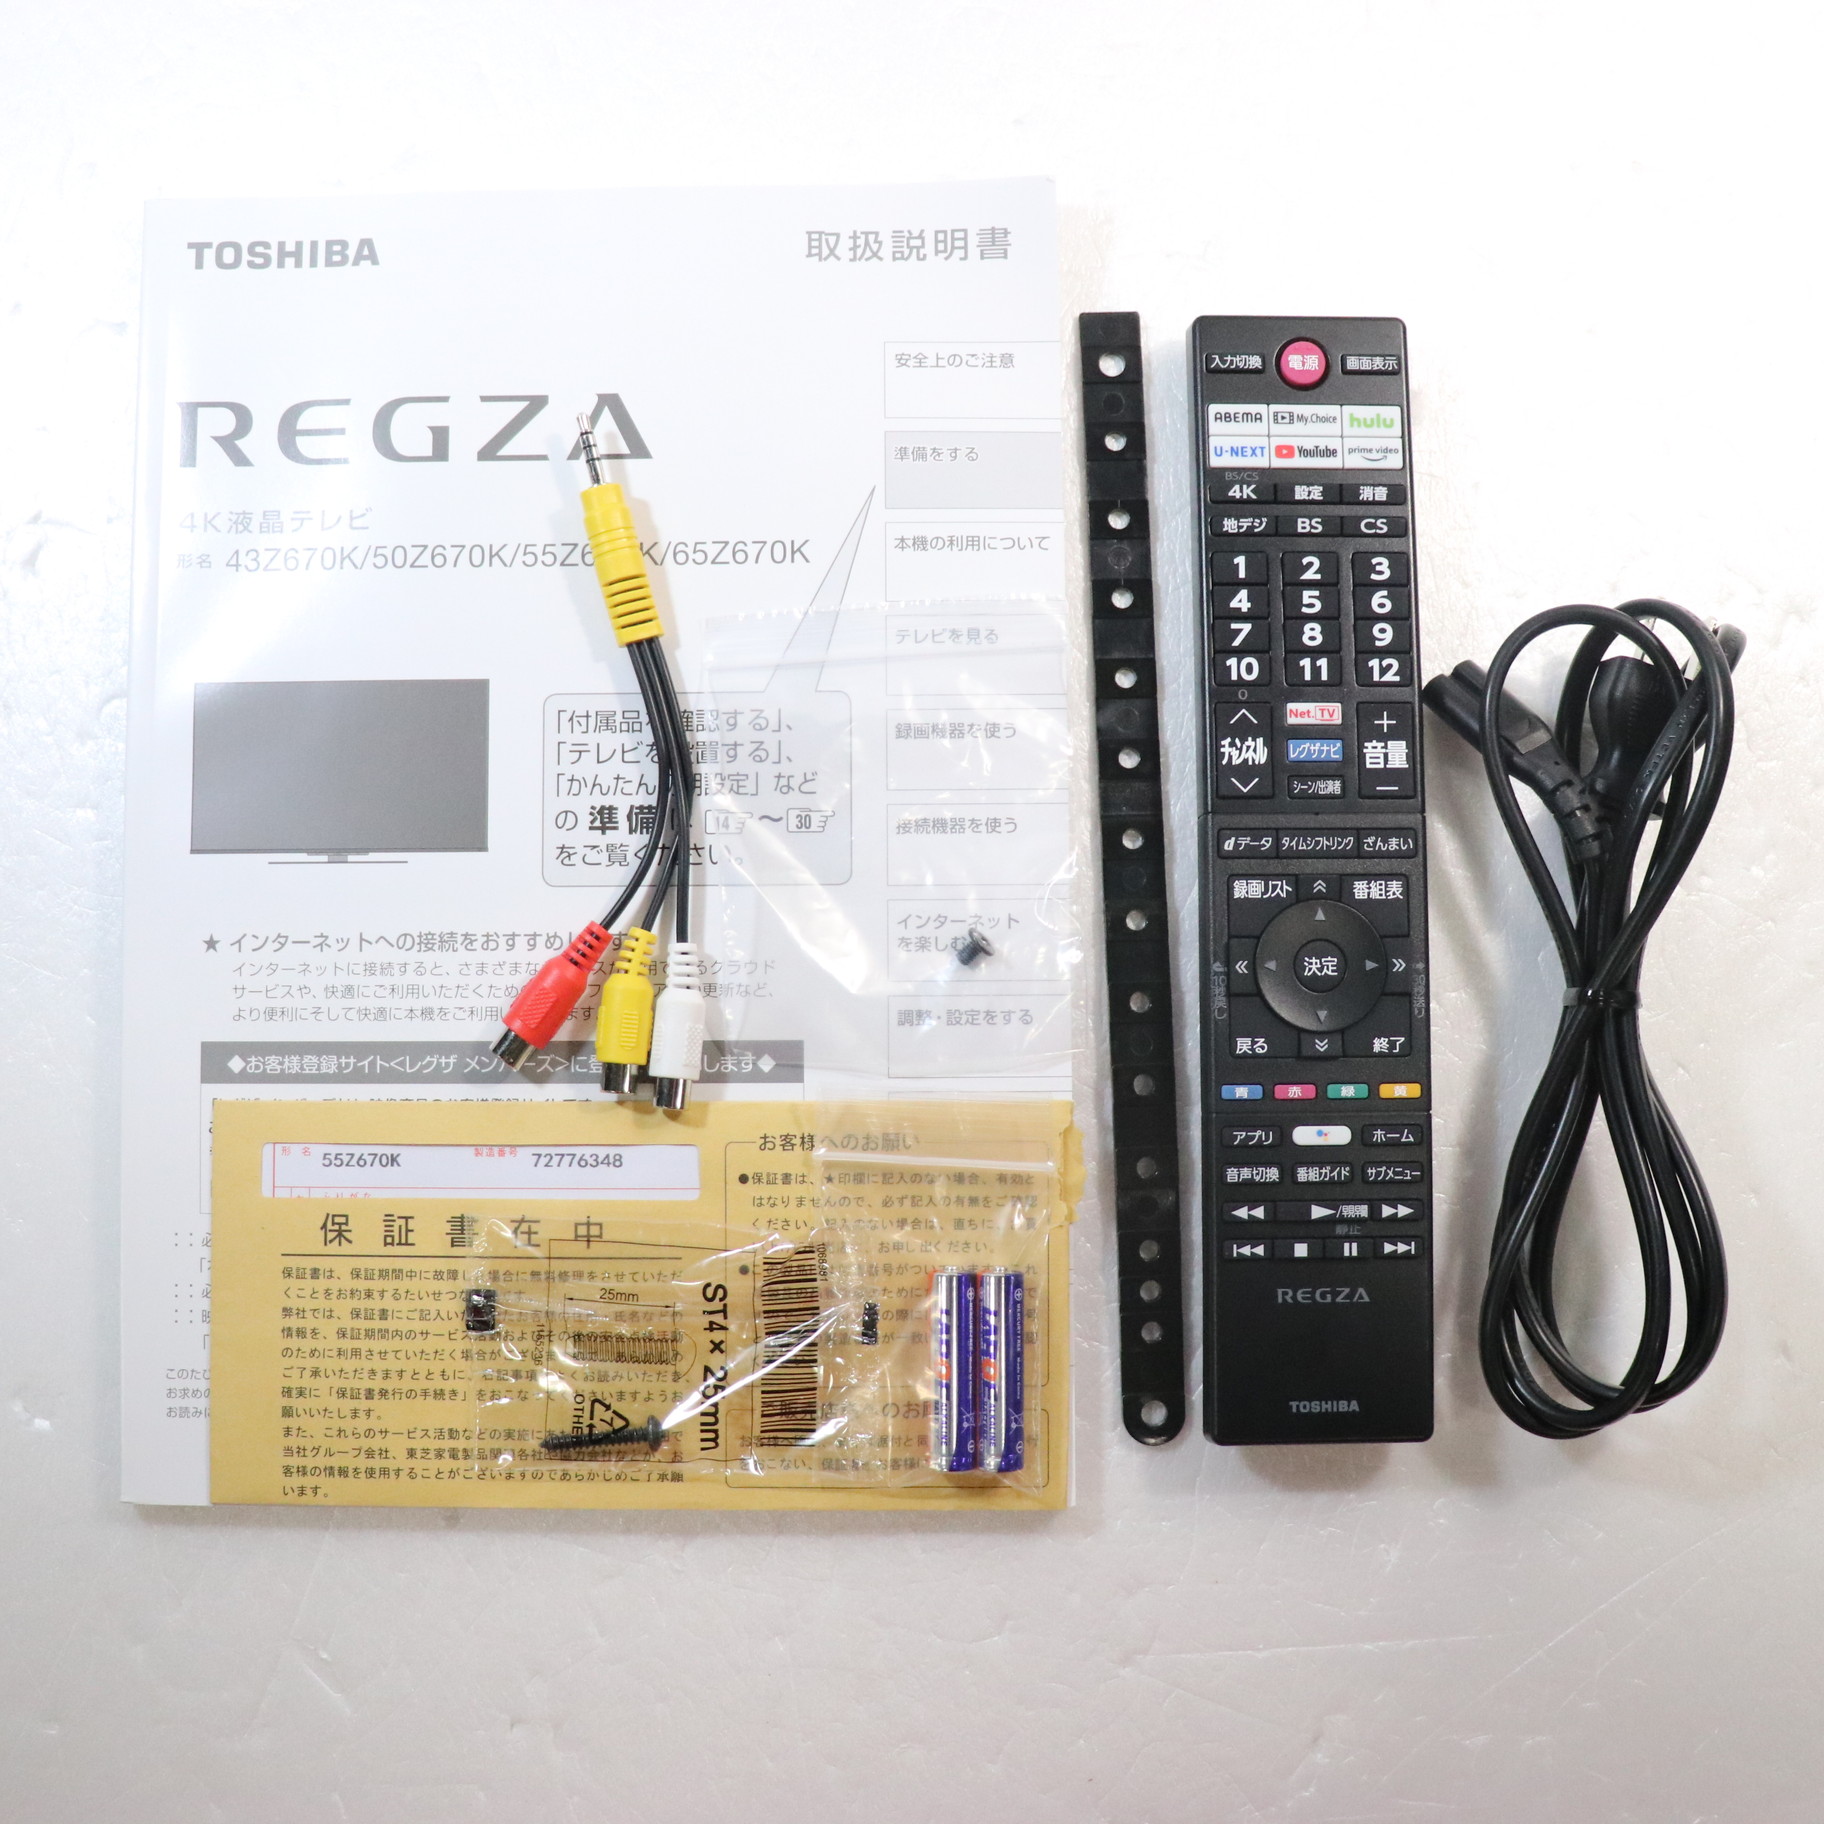 TOSHIBA REGZA 55Z670K 4K 液晶テレビ 東芝 レグザ